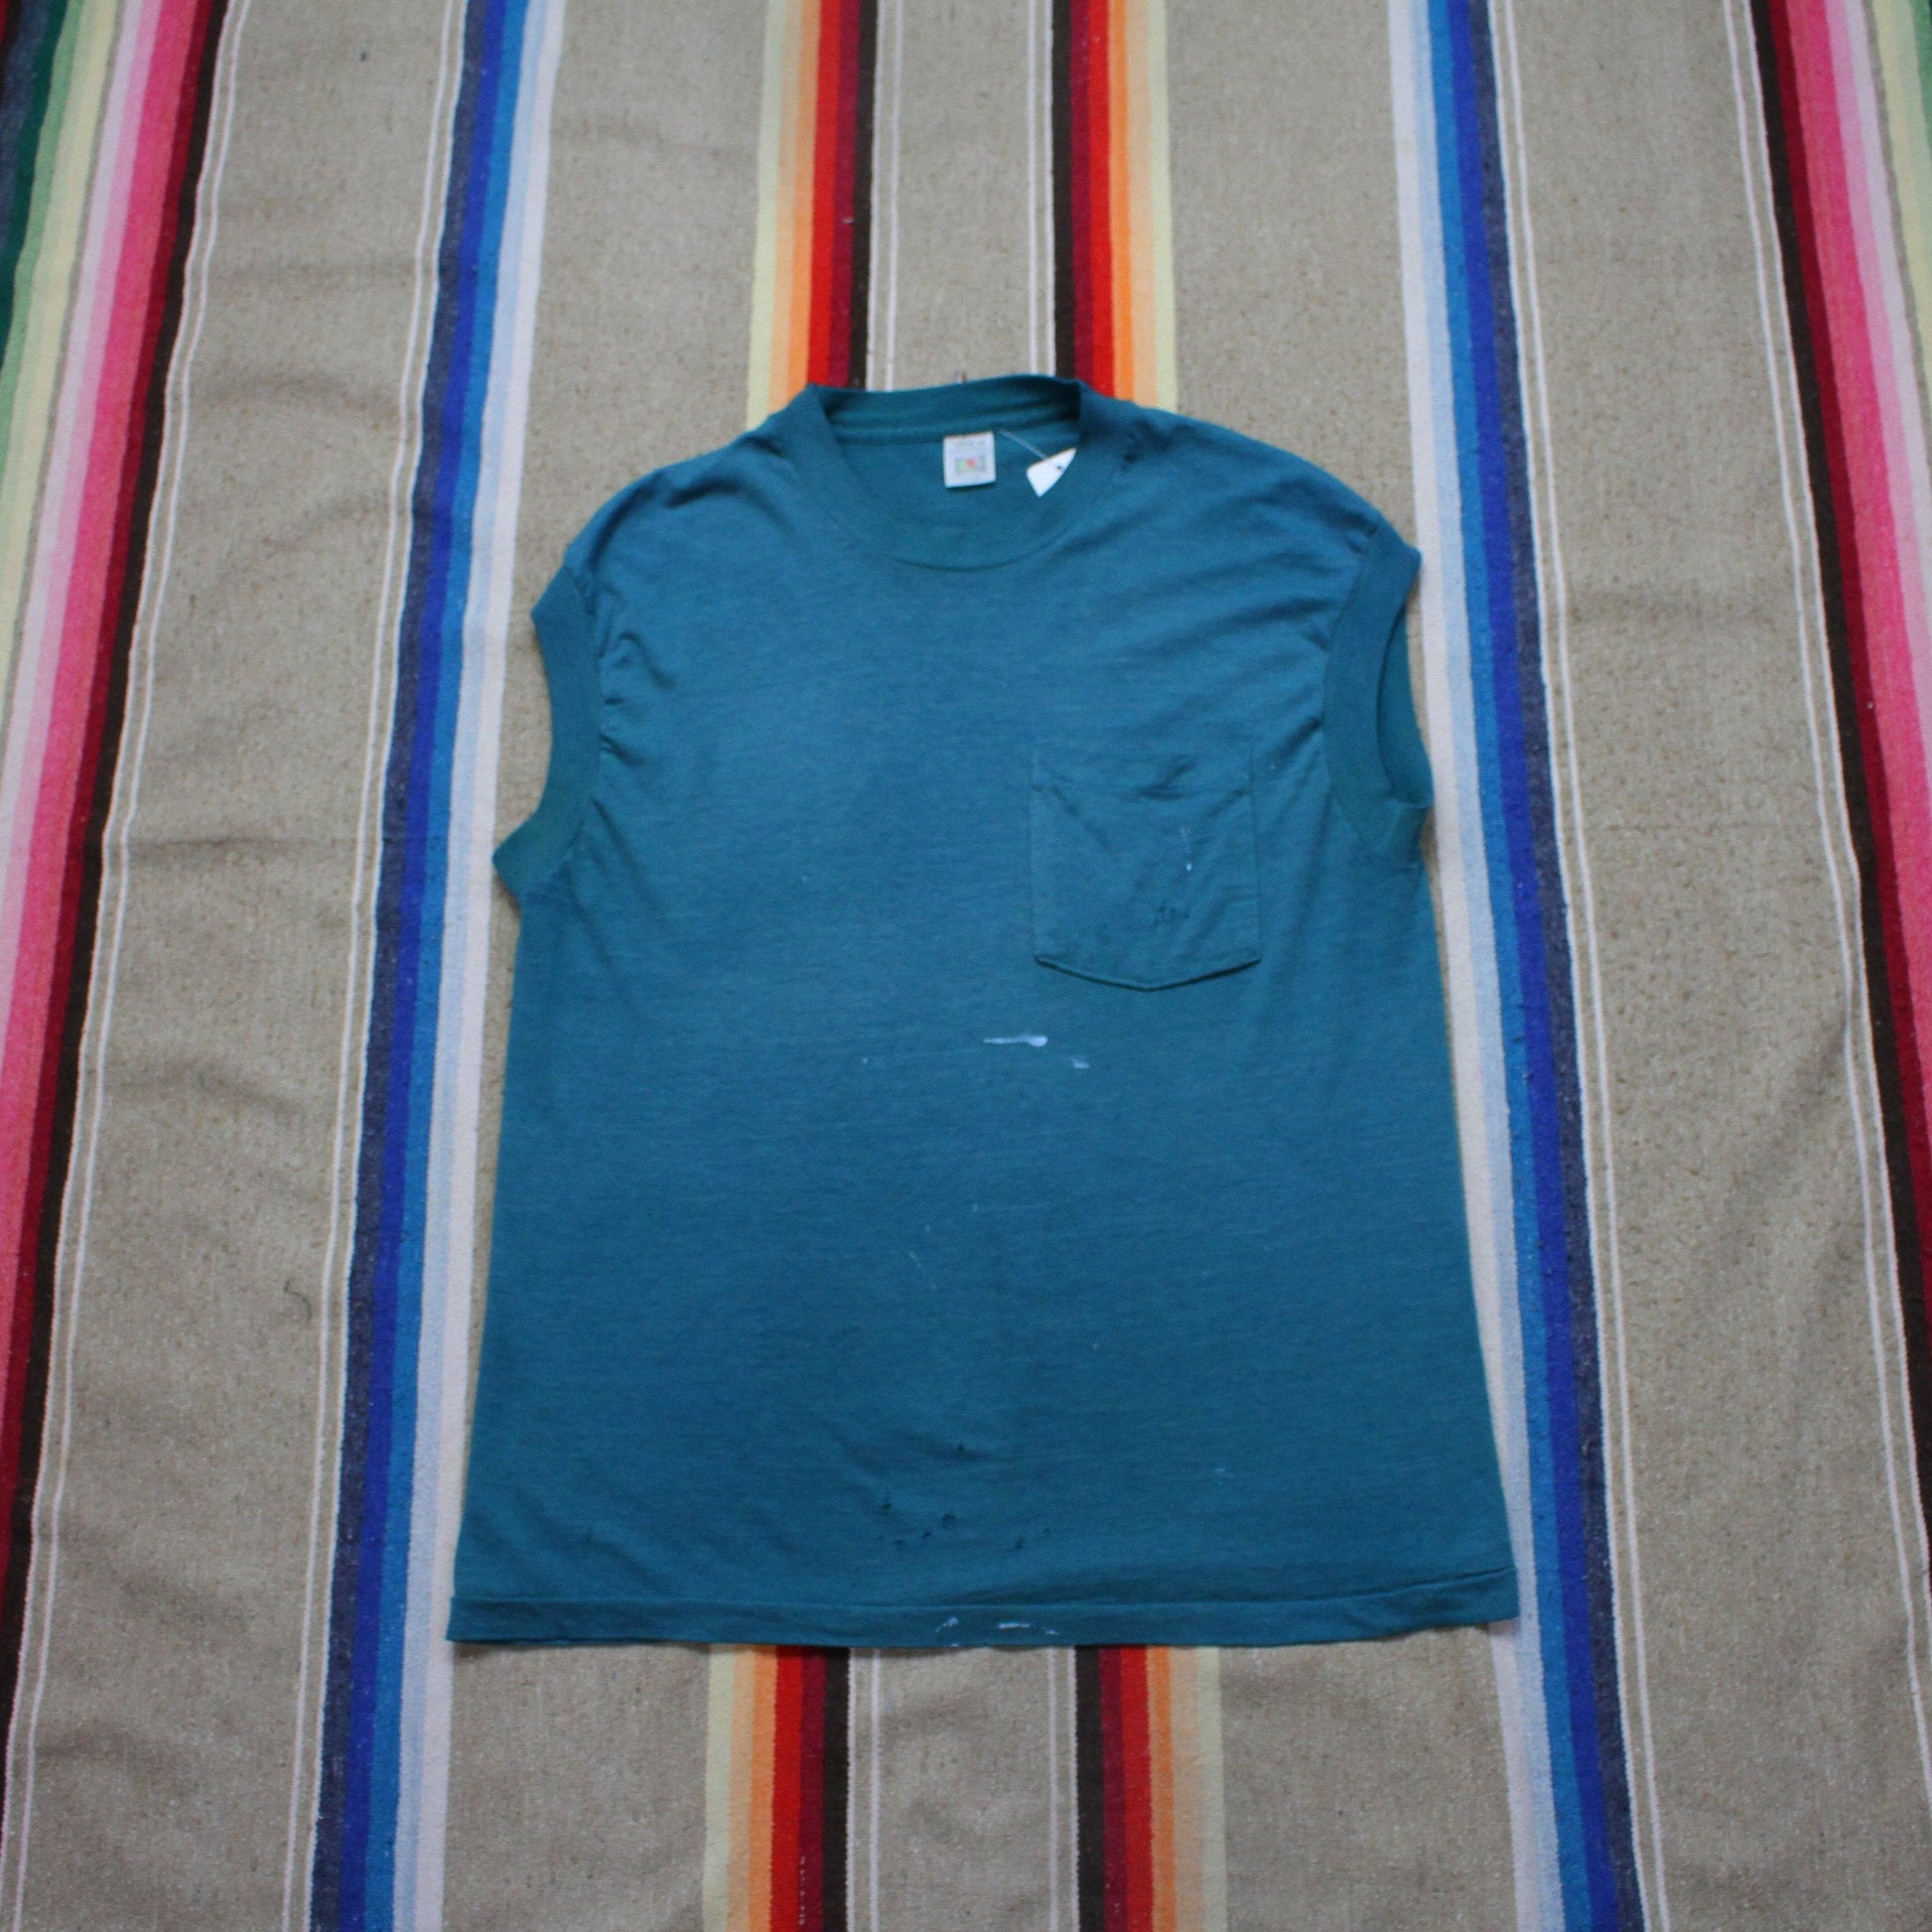 1990s Fruit of the Loom Blank Teal Golden Blend Pocket T Tank Top T-Shirt Size M